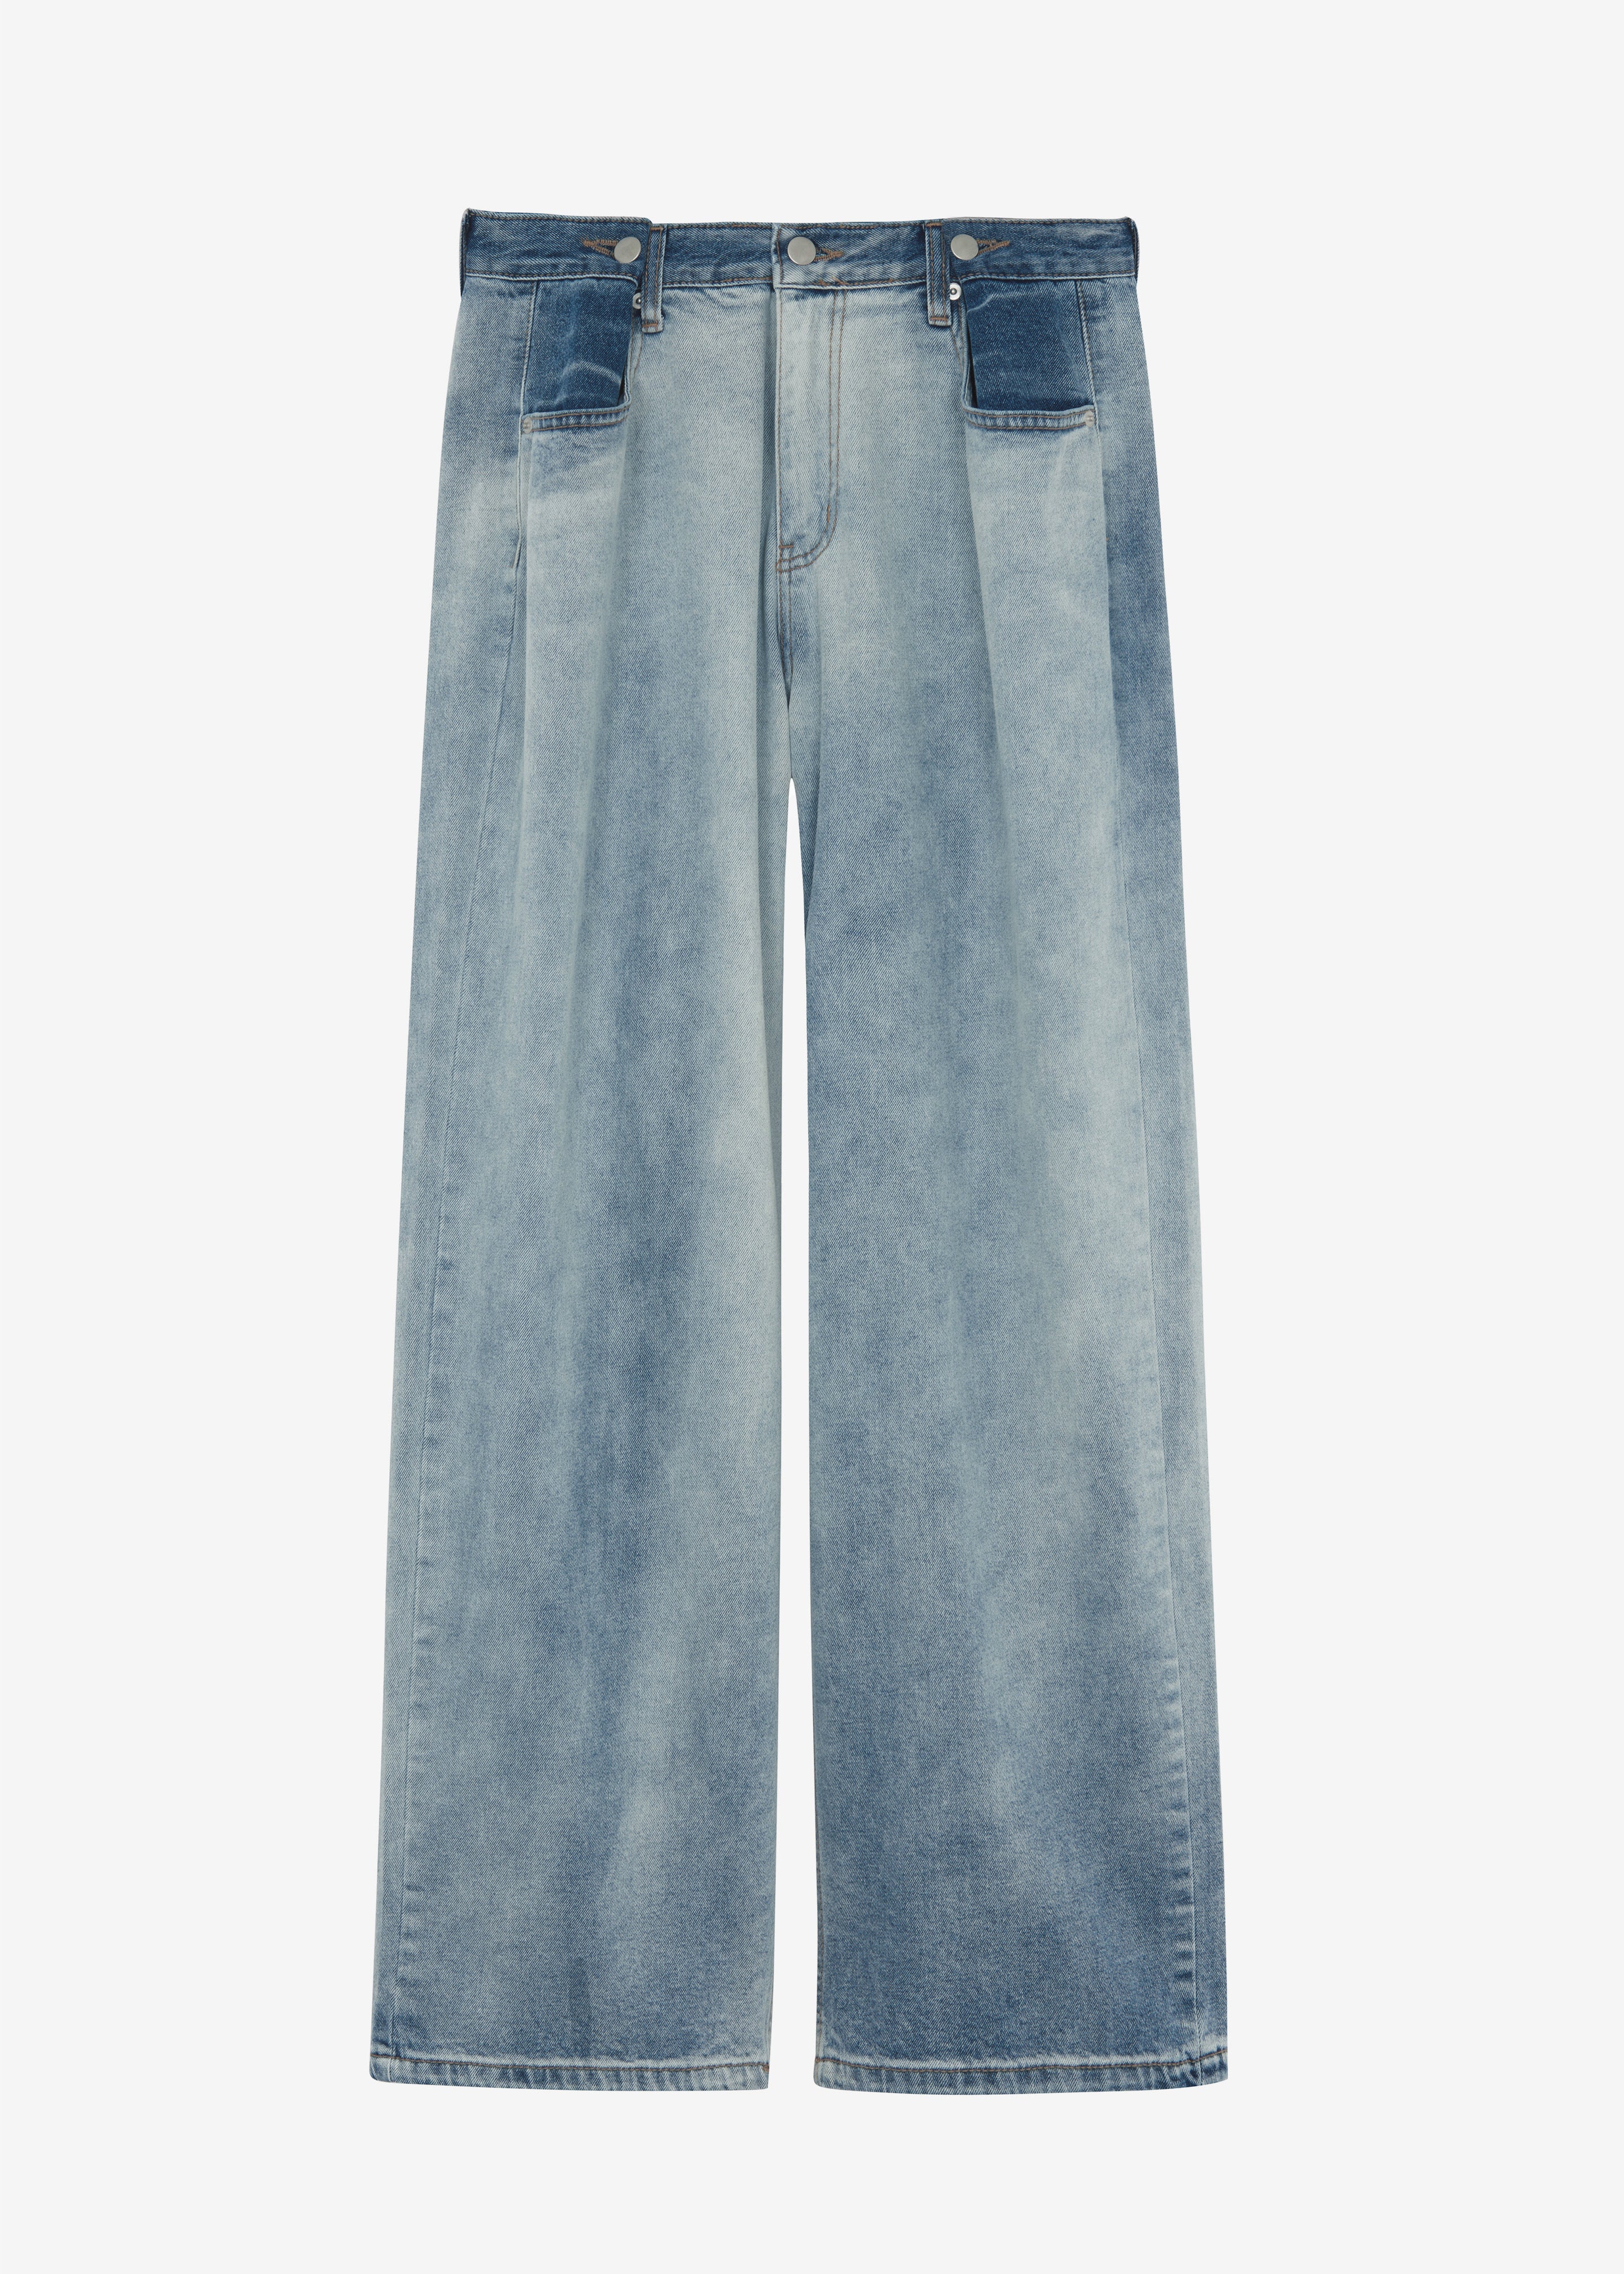 Hayla Contrast Denim Pants - Light Wash/Blue - 10